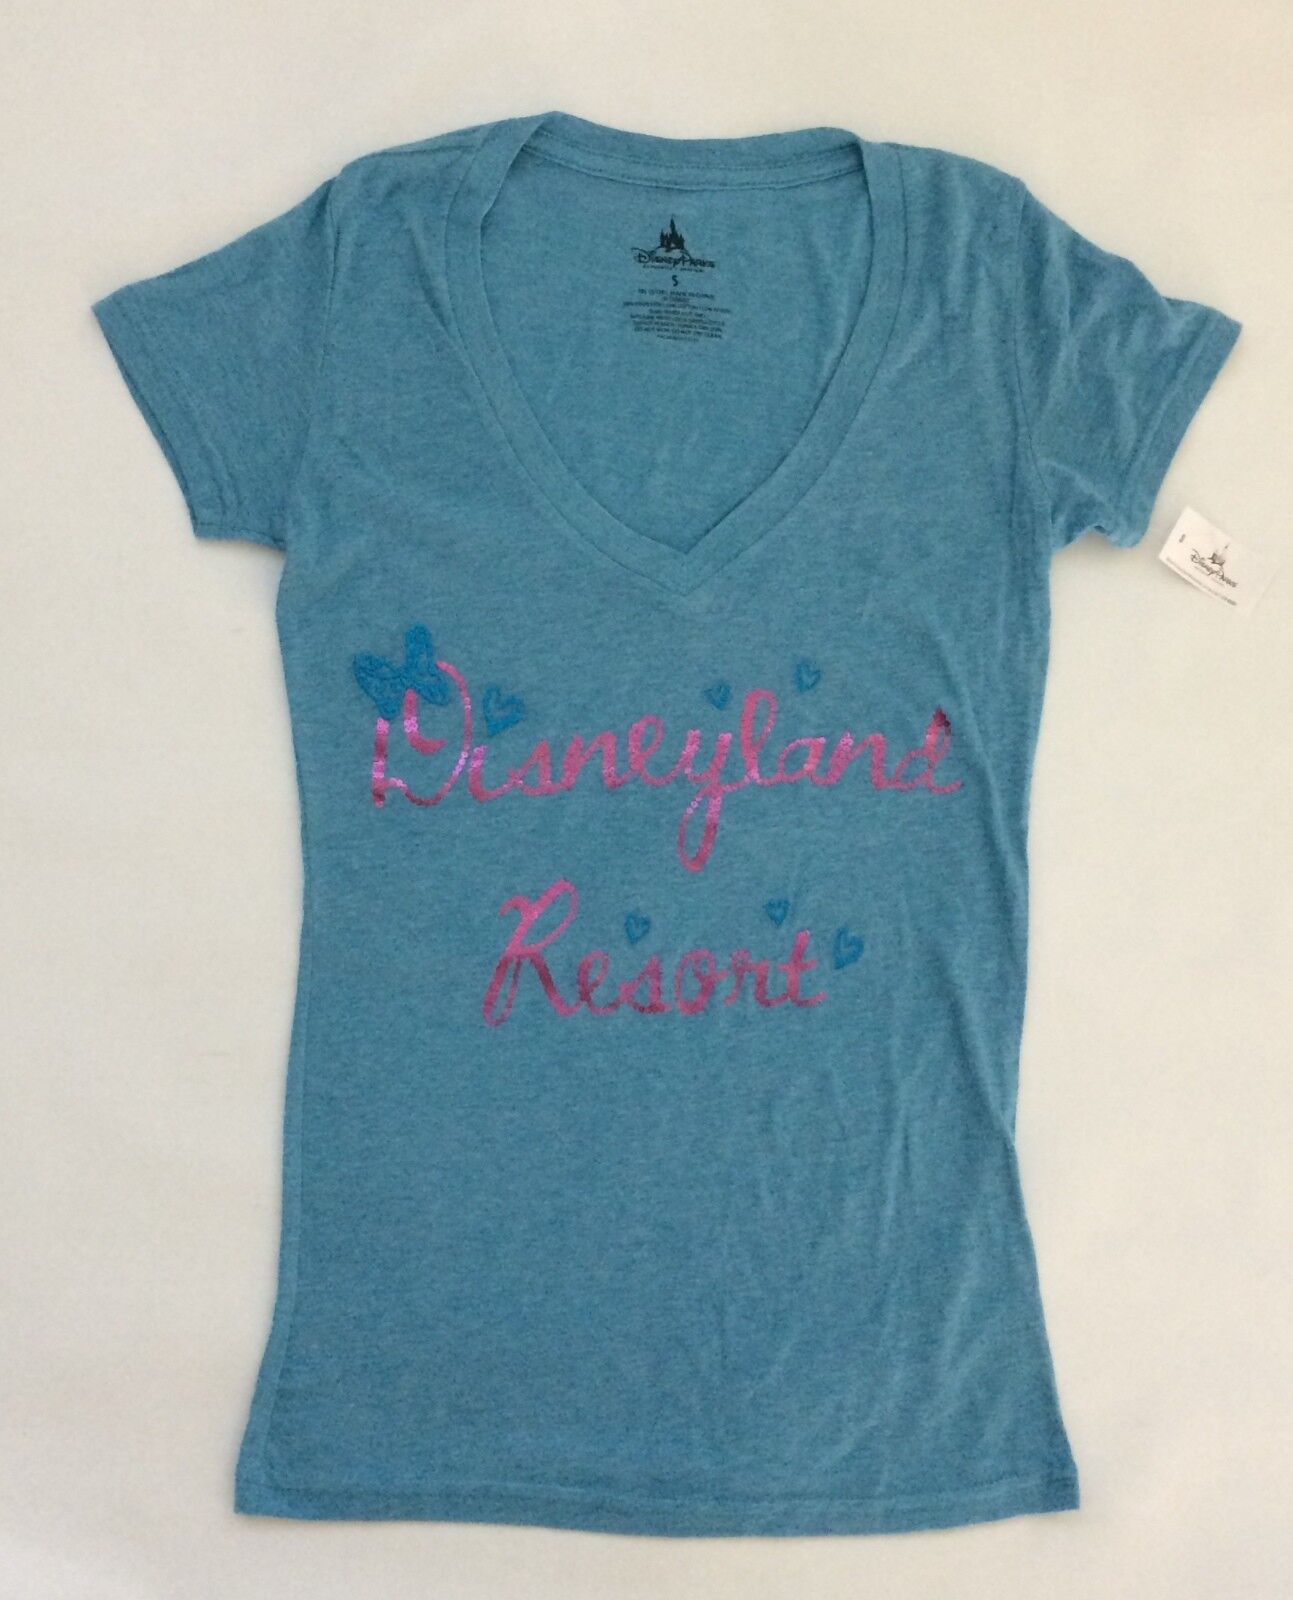 BNWT Disneyland Resort Women\'s V-neck t-shirt Sz XL Blue Minnie Bow new